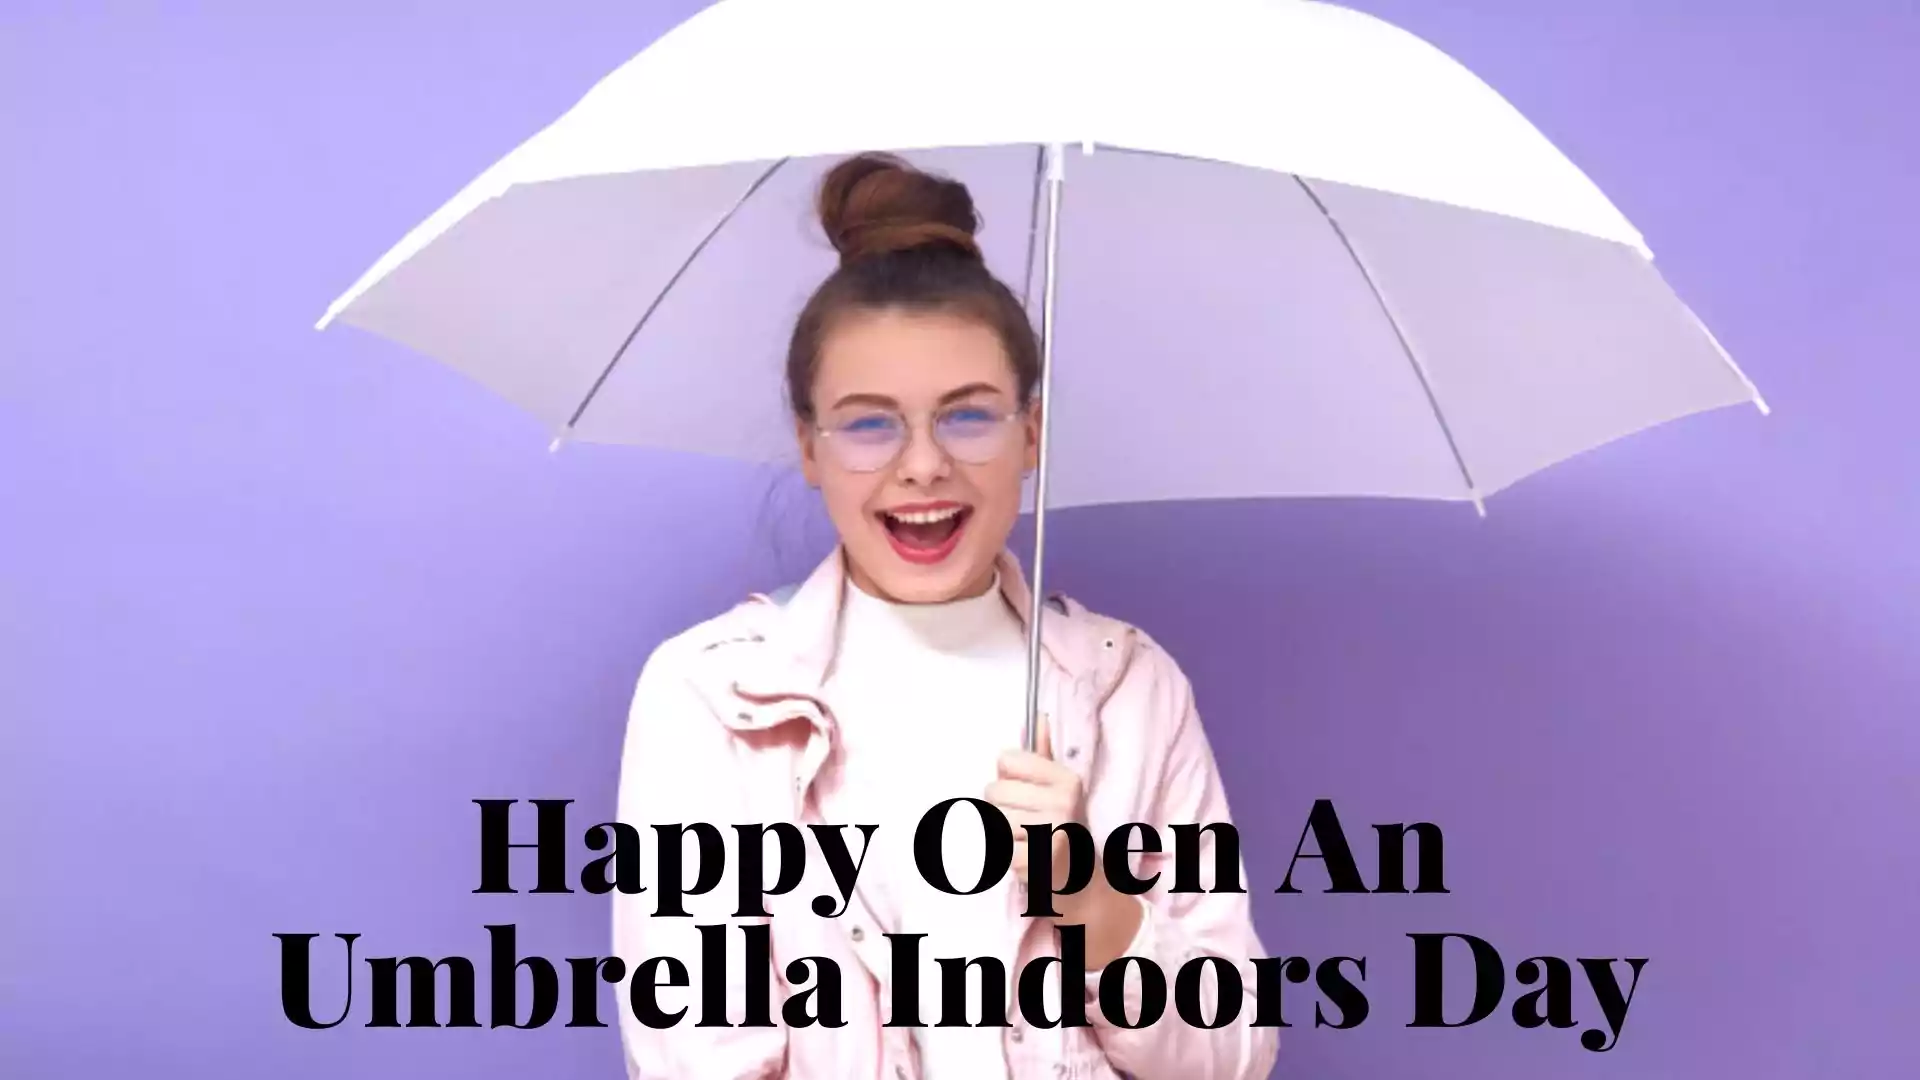 Happy Open An Umbrella Indoors Day Image